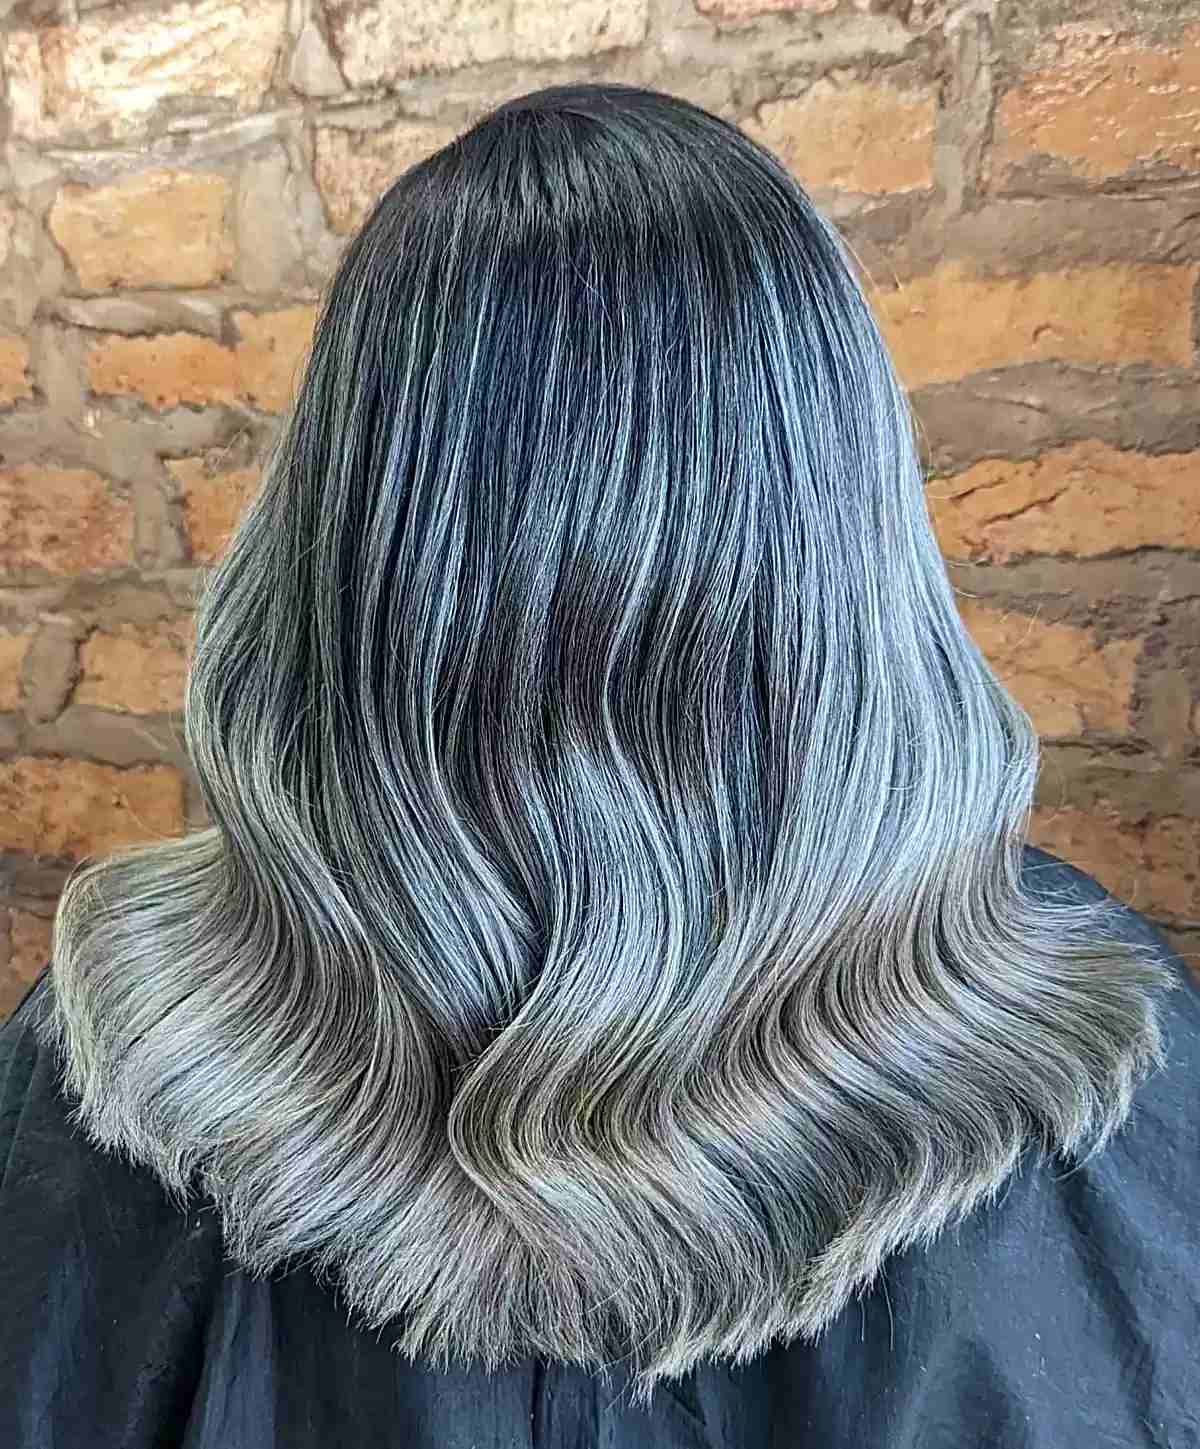 Silver Blonde Tips on Mid-Length Dark Wavy Hair Grey Balayage